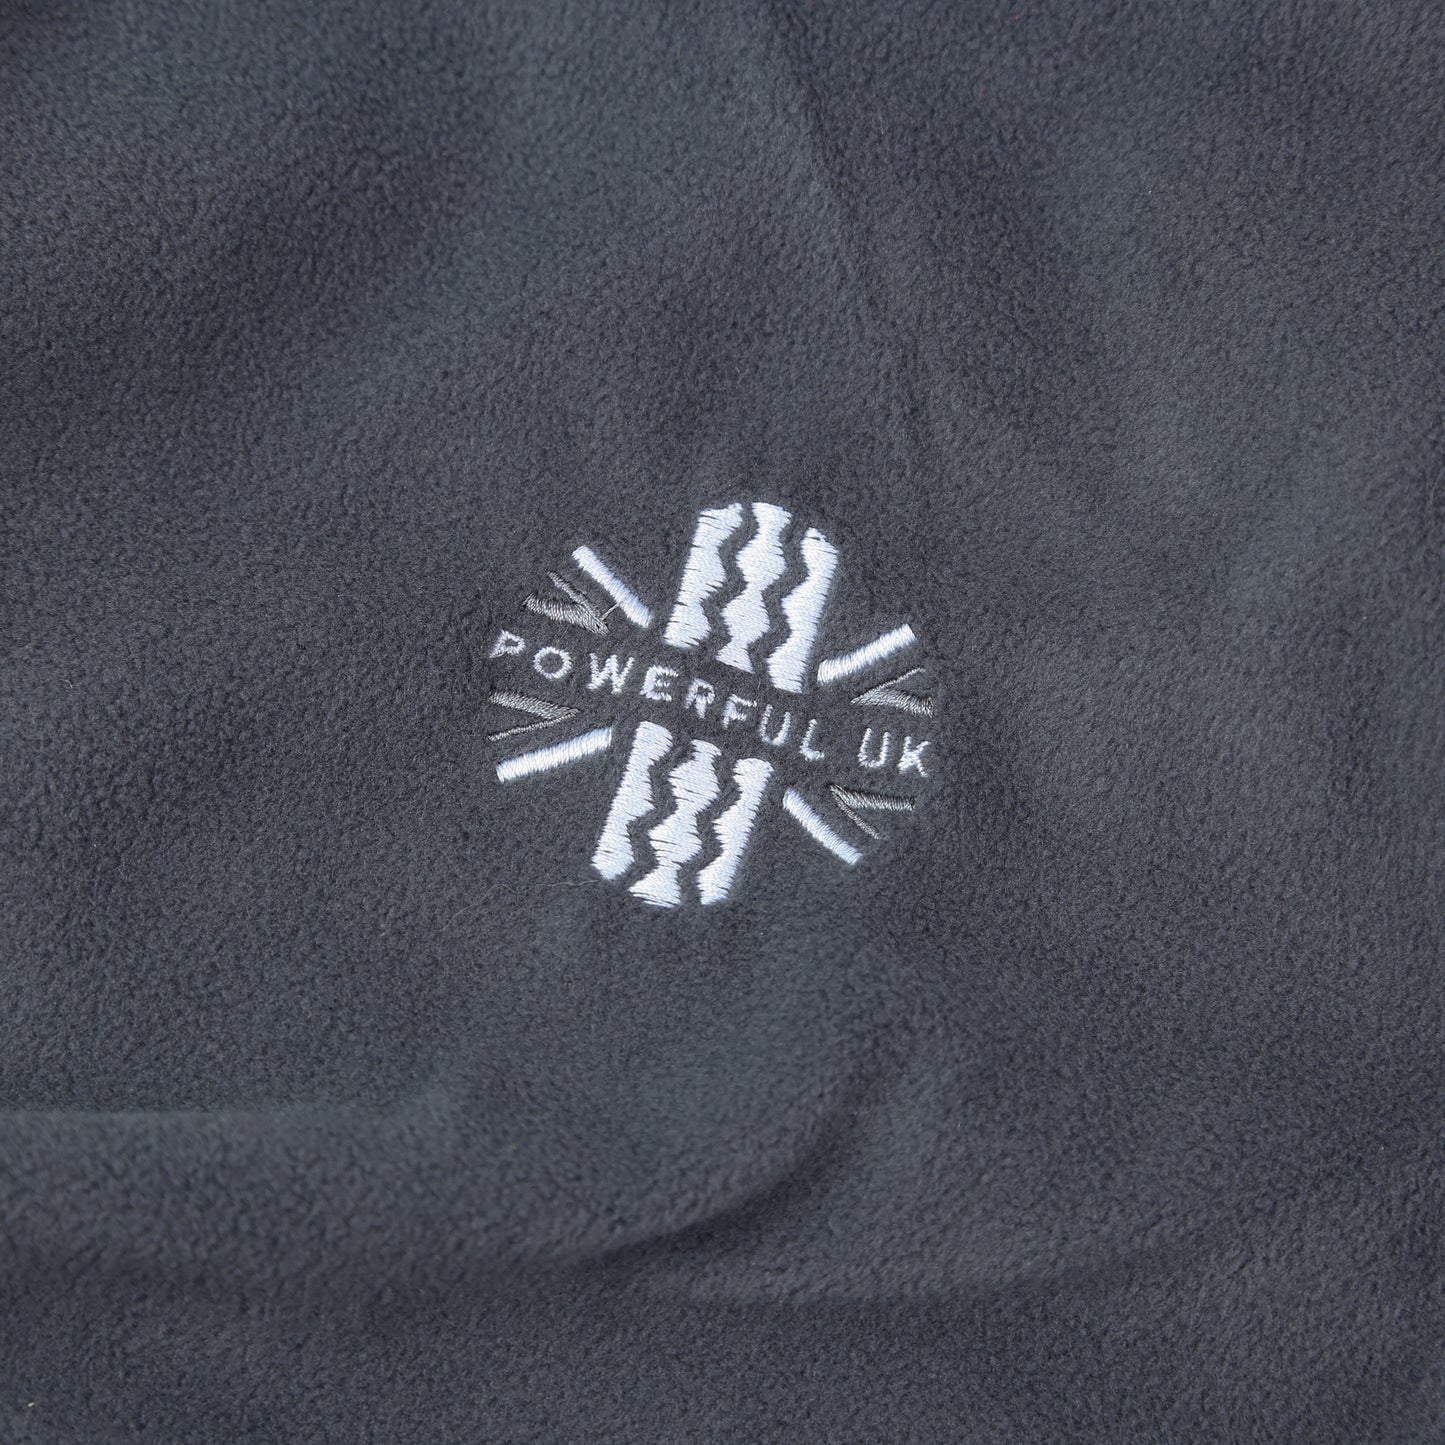 Embroidered Fleece Powerful UK Ltd "Merch" - Seal Grey - SMALL